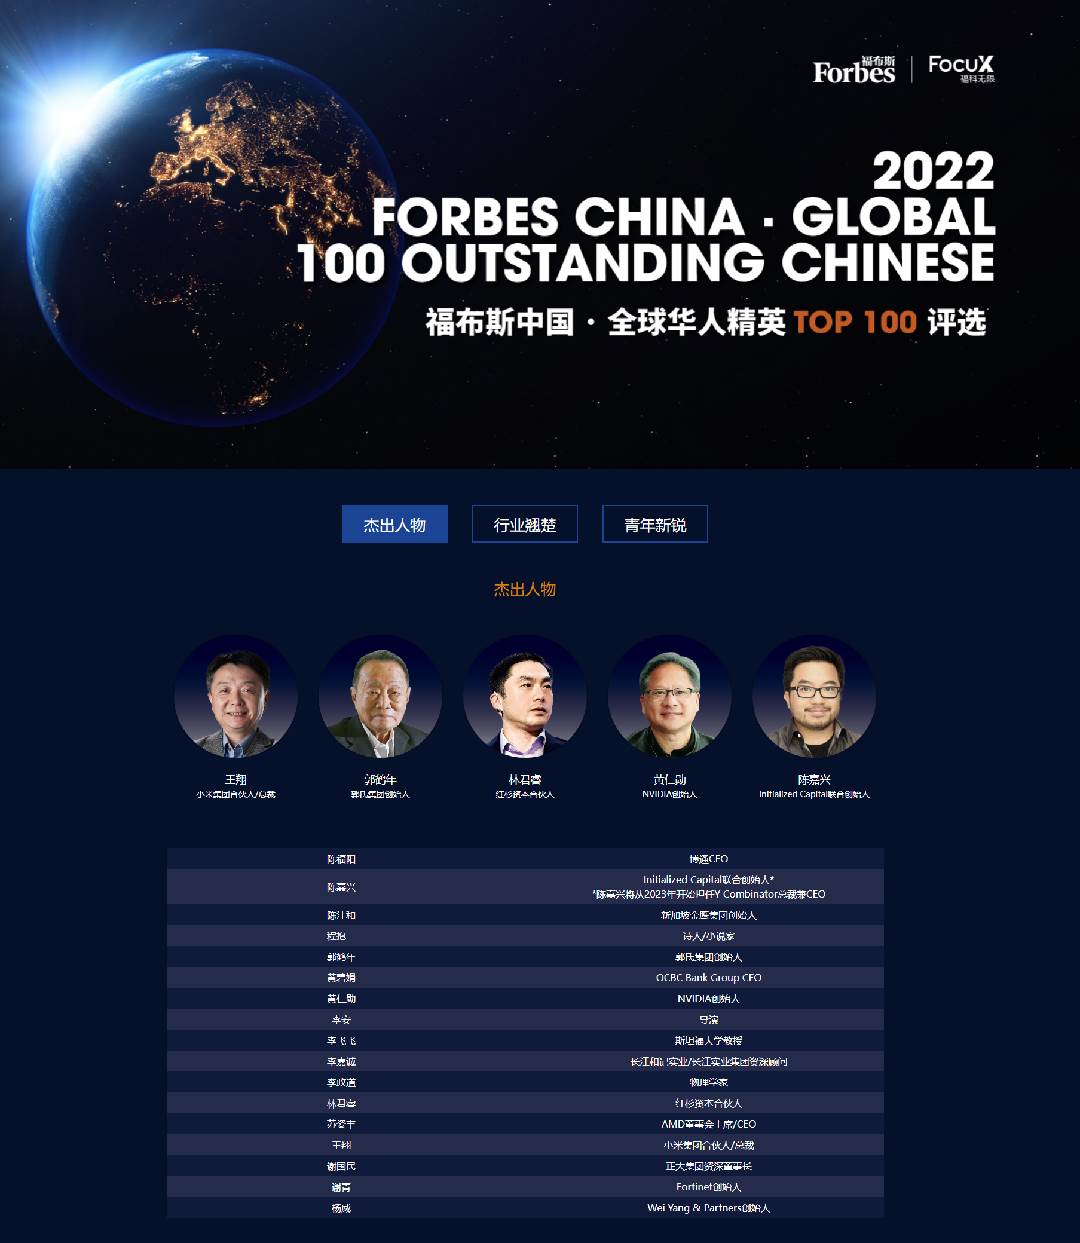  Forbes China 2022.jpg 